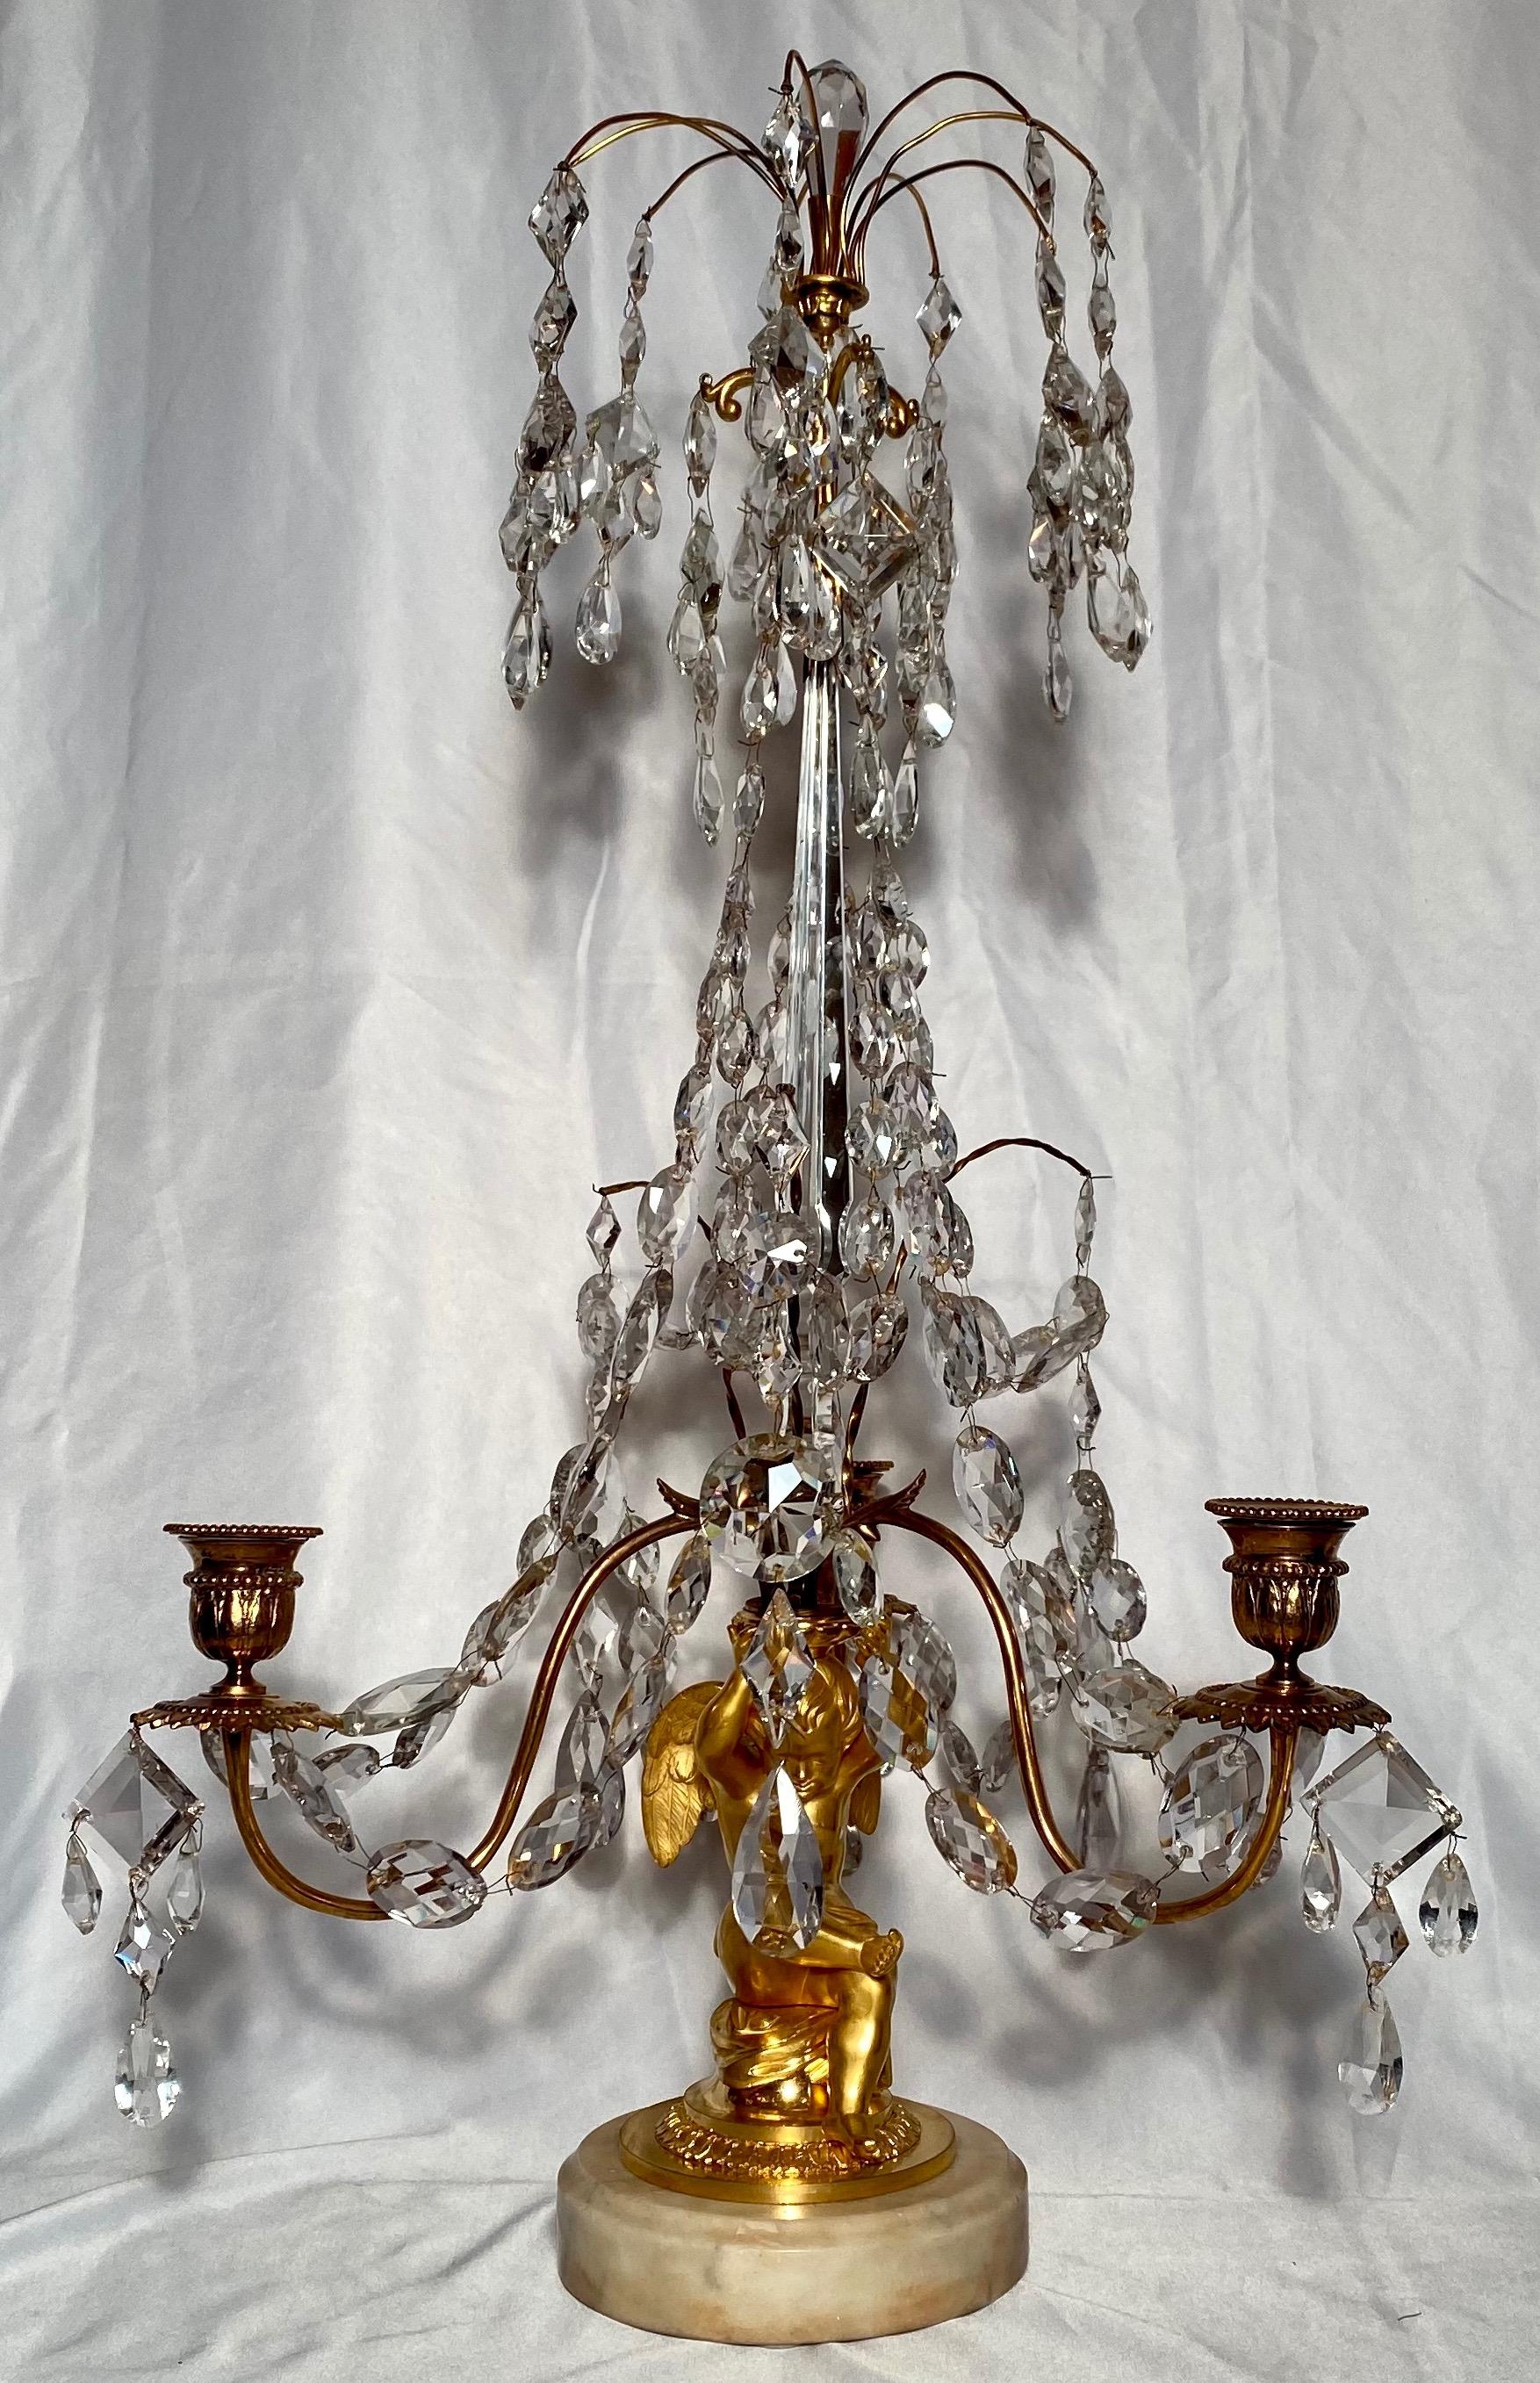 Pair of antique delicate ormolu and crystal candelabra, circa 1890.
  
  